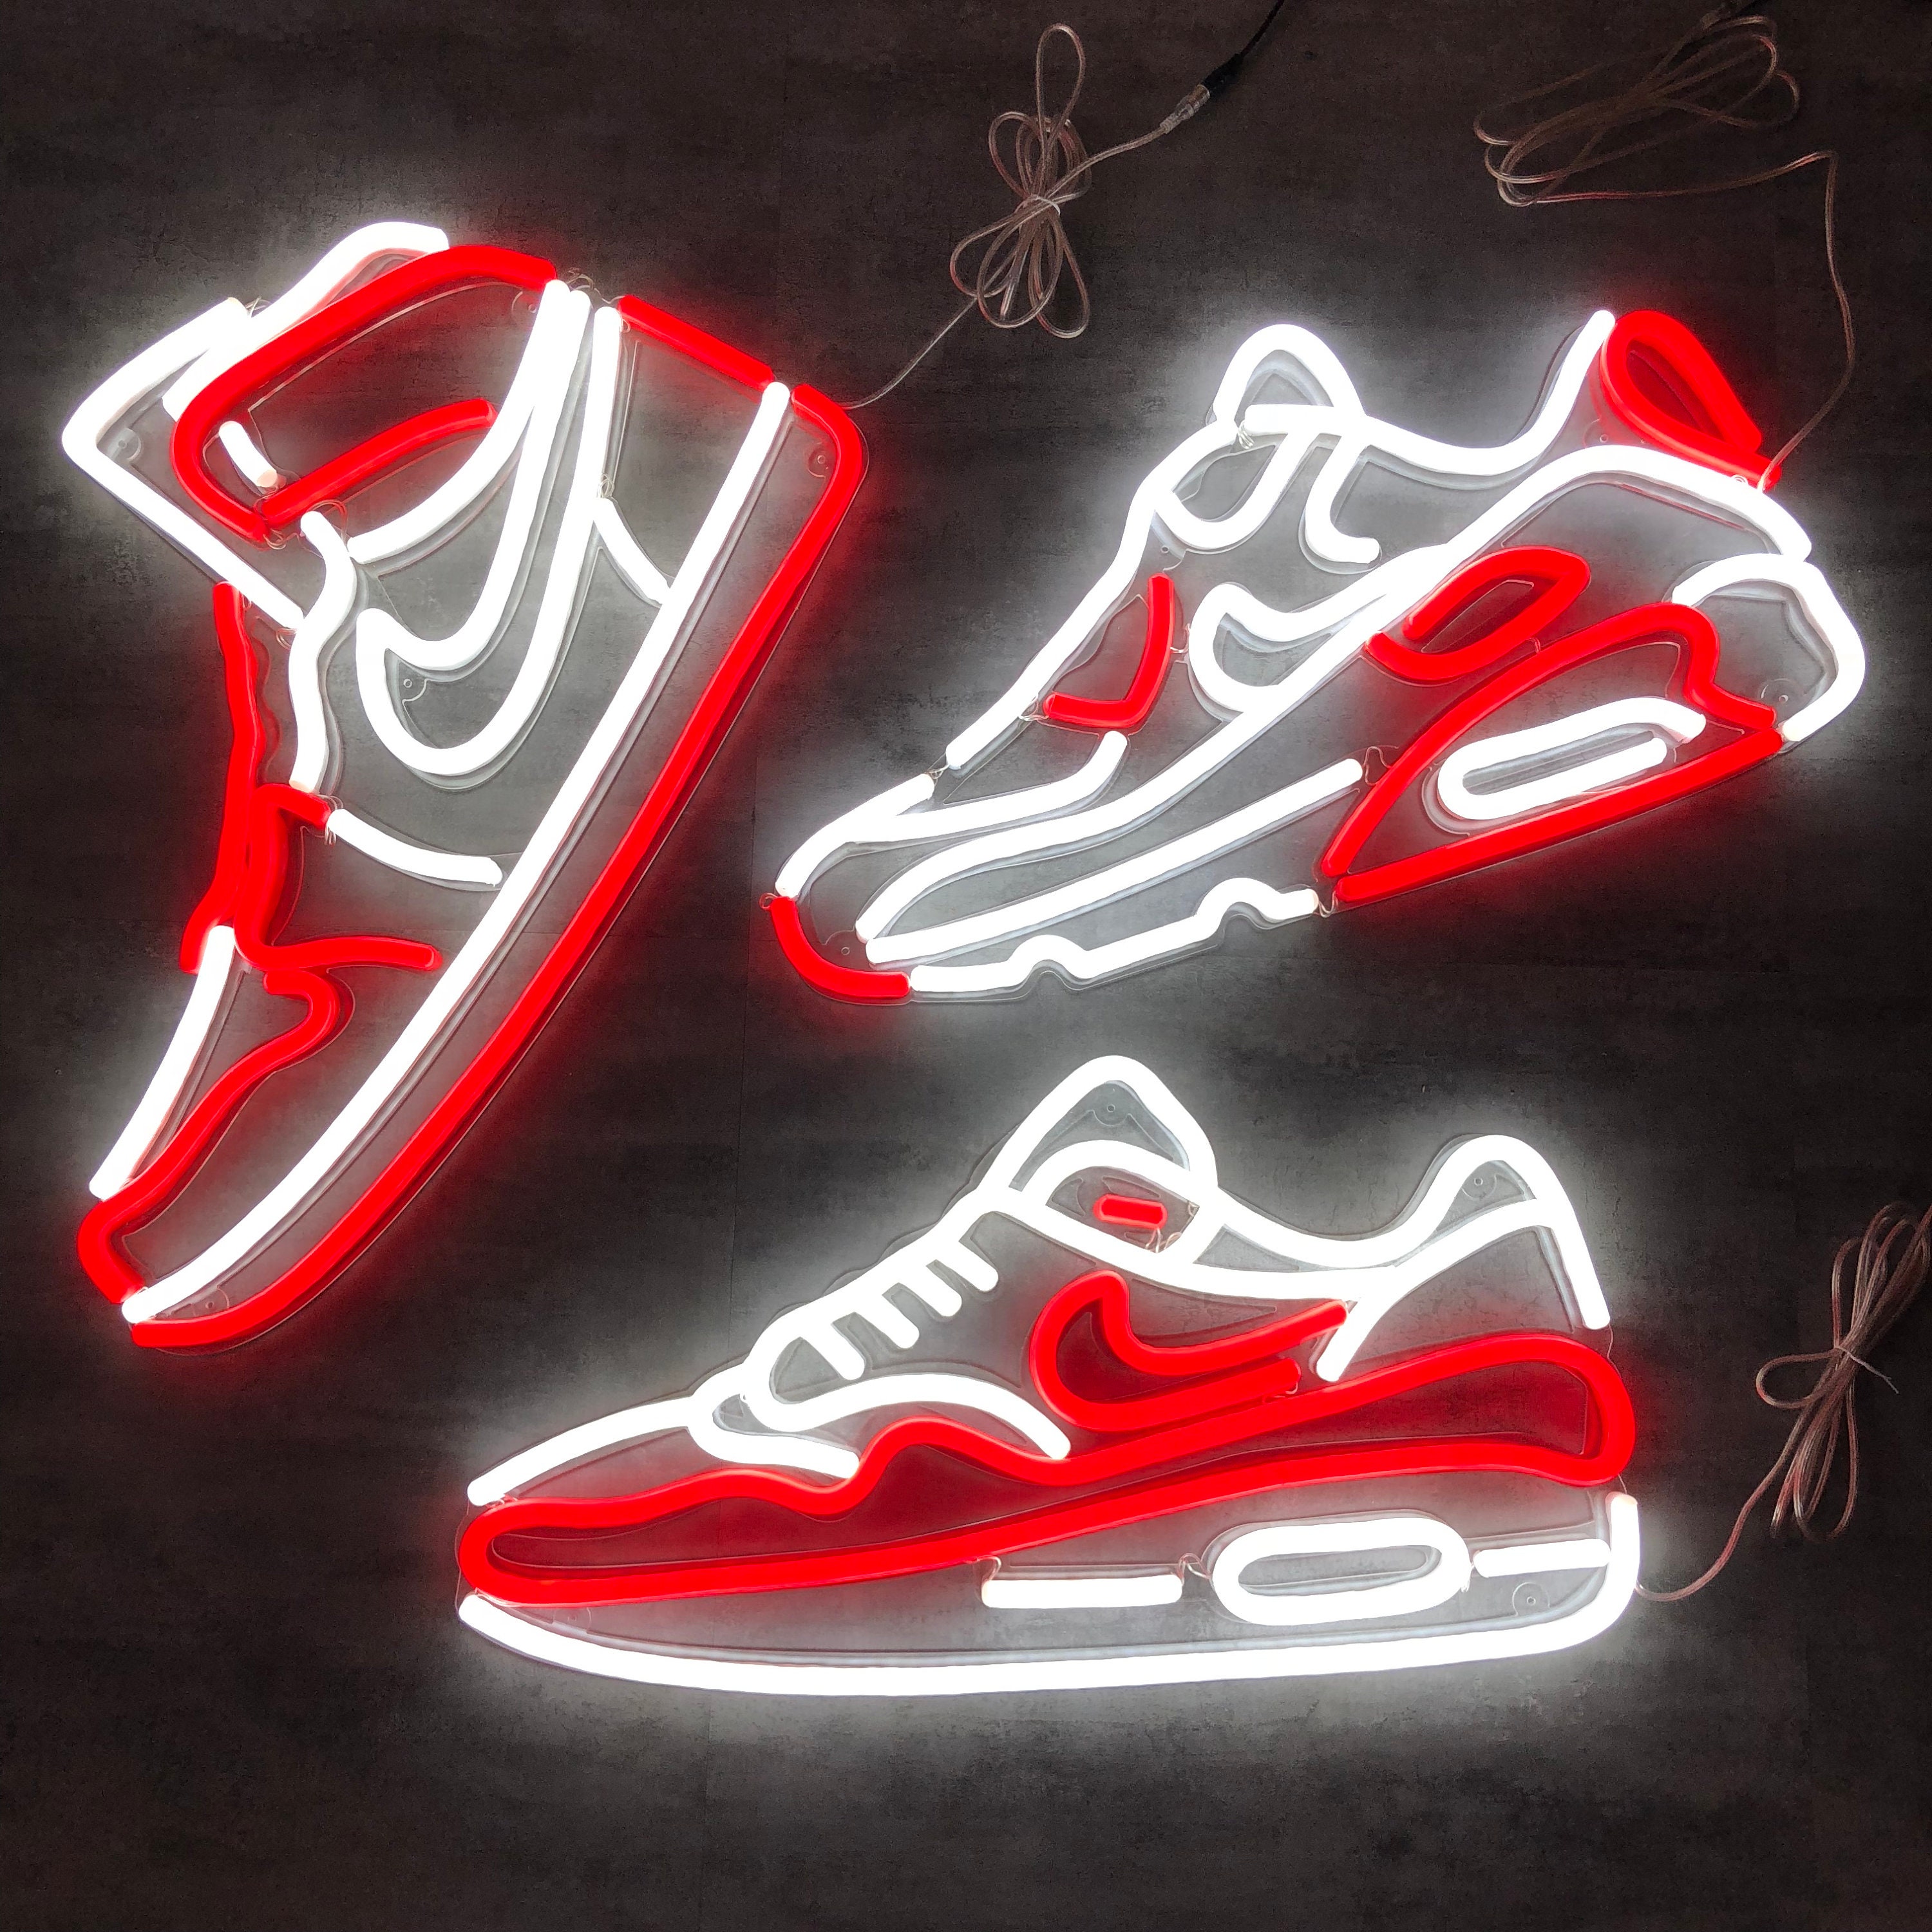 Air Jordan LED Neon Sign Michael Jordan Art Air Jordan